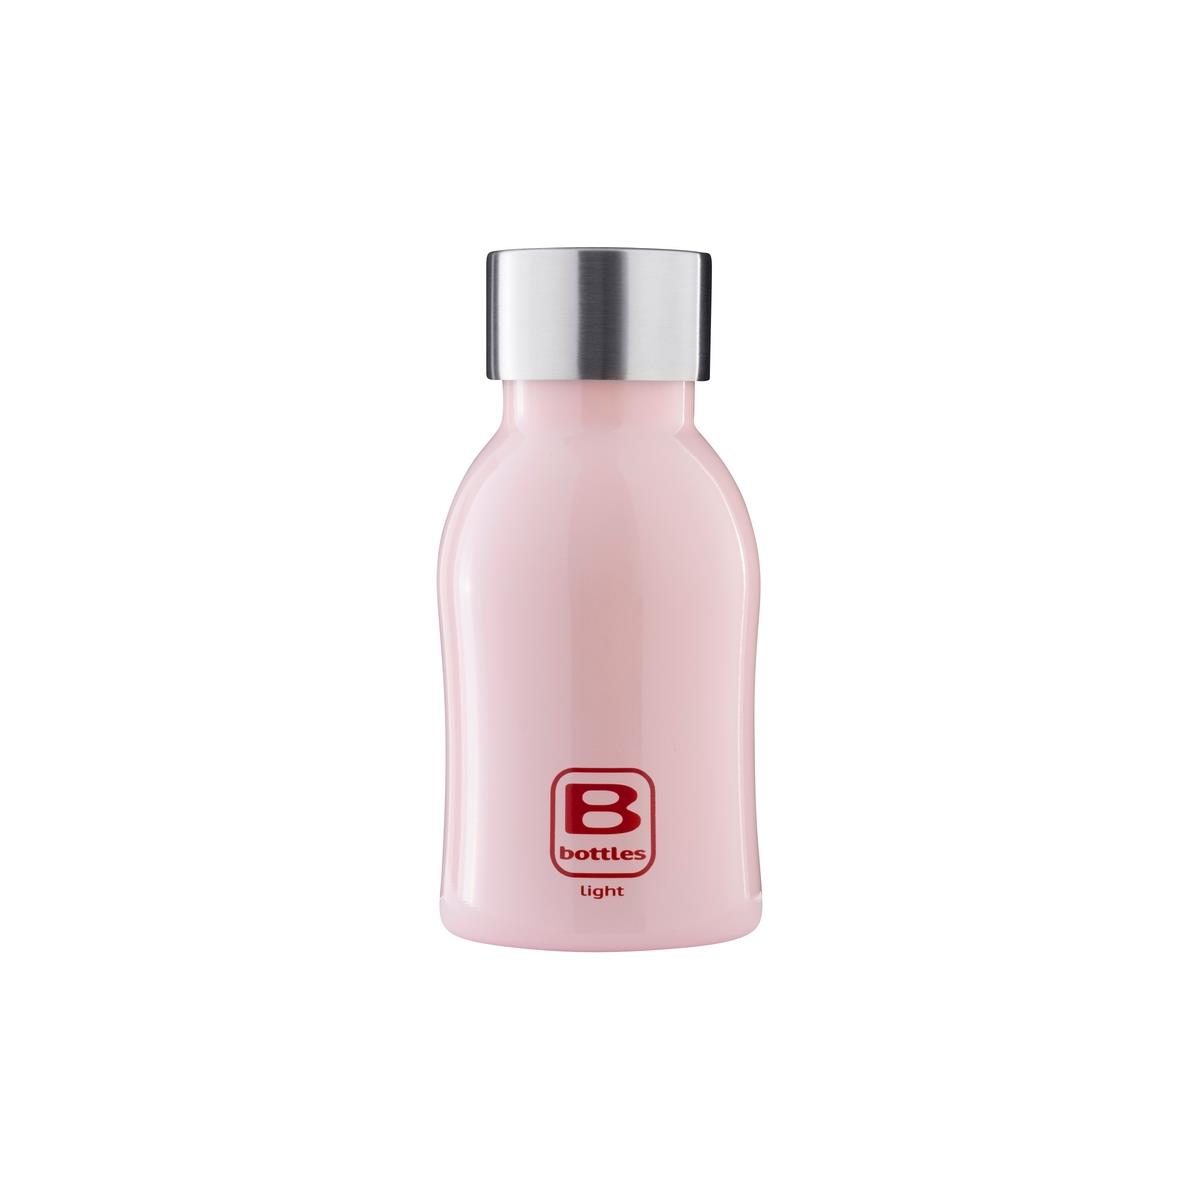 photo B Bottles Light - Pink - 350 ml - Bottiglia in acciaio inox 18/10 ultra leggera e compatta